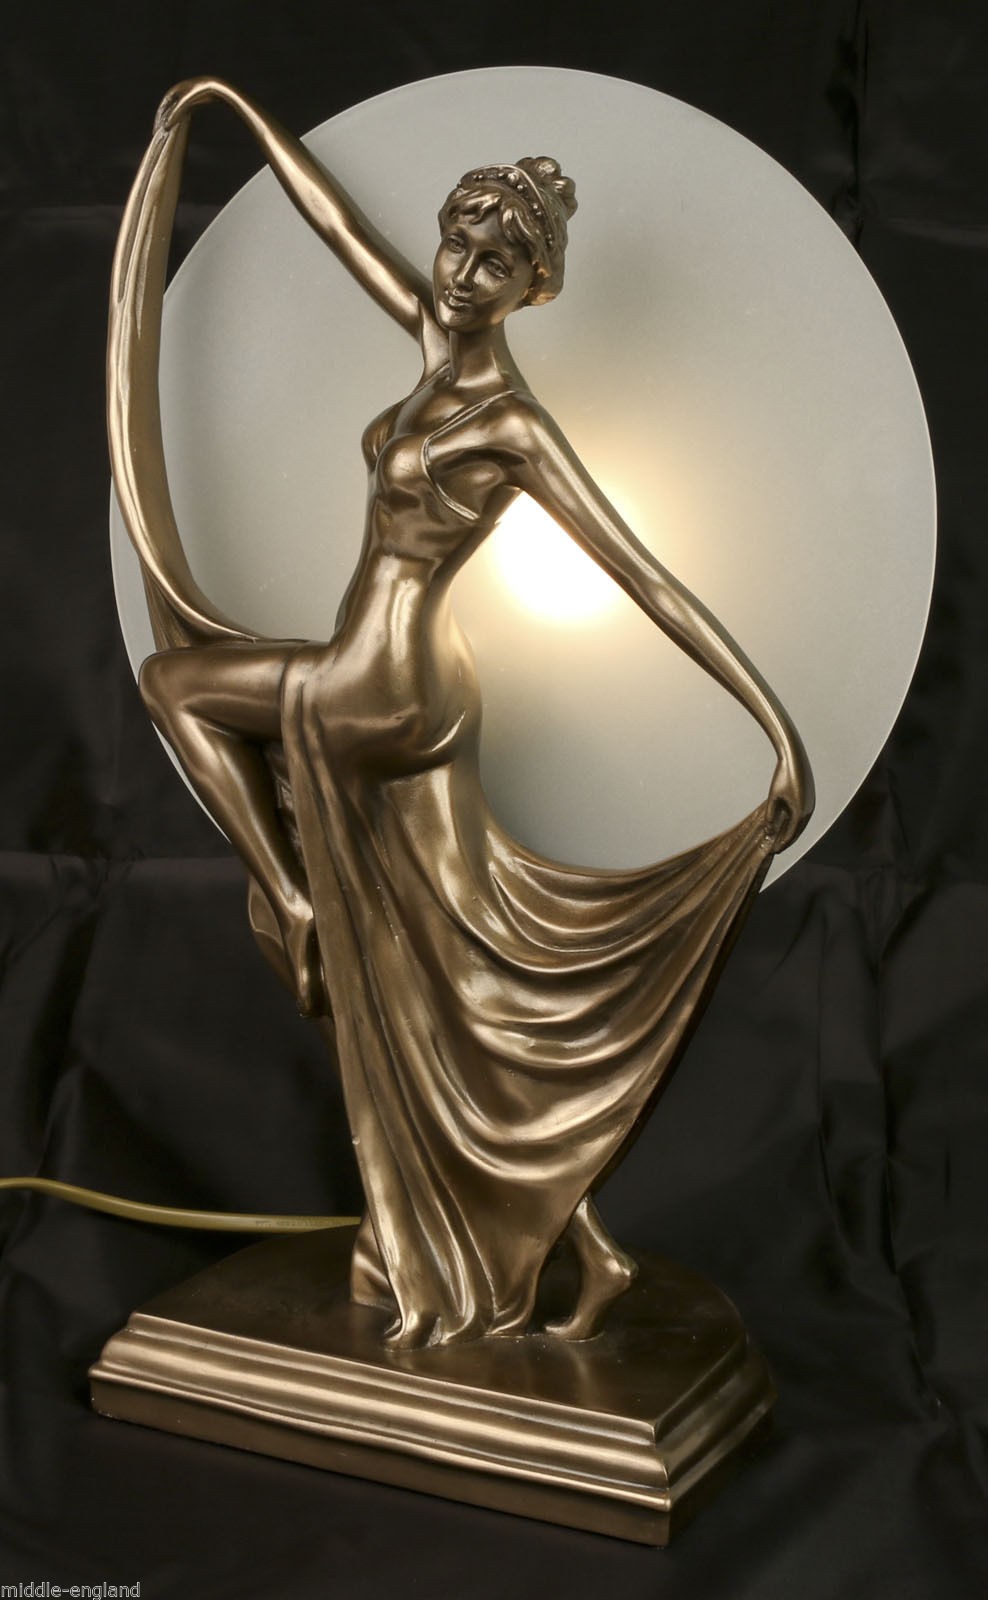 Art Deco Dancing Lady Figurine Table Lamp + Free Bulb